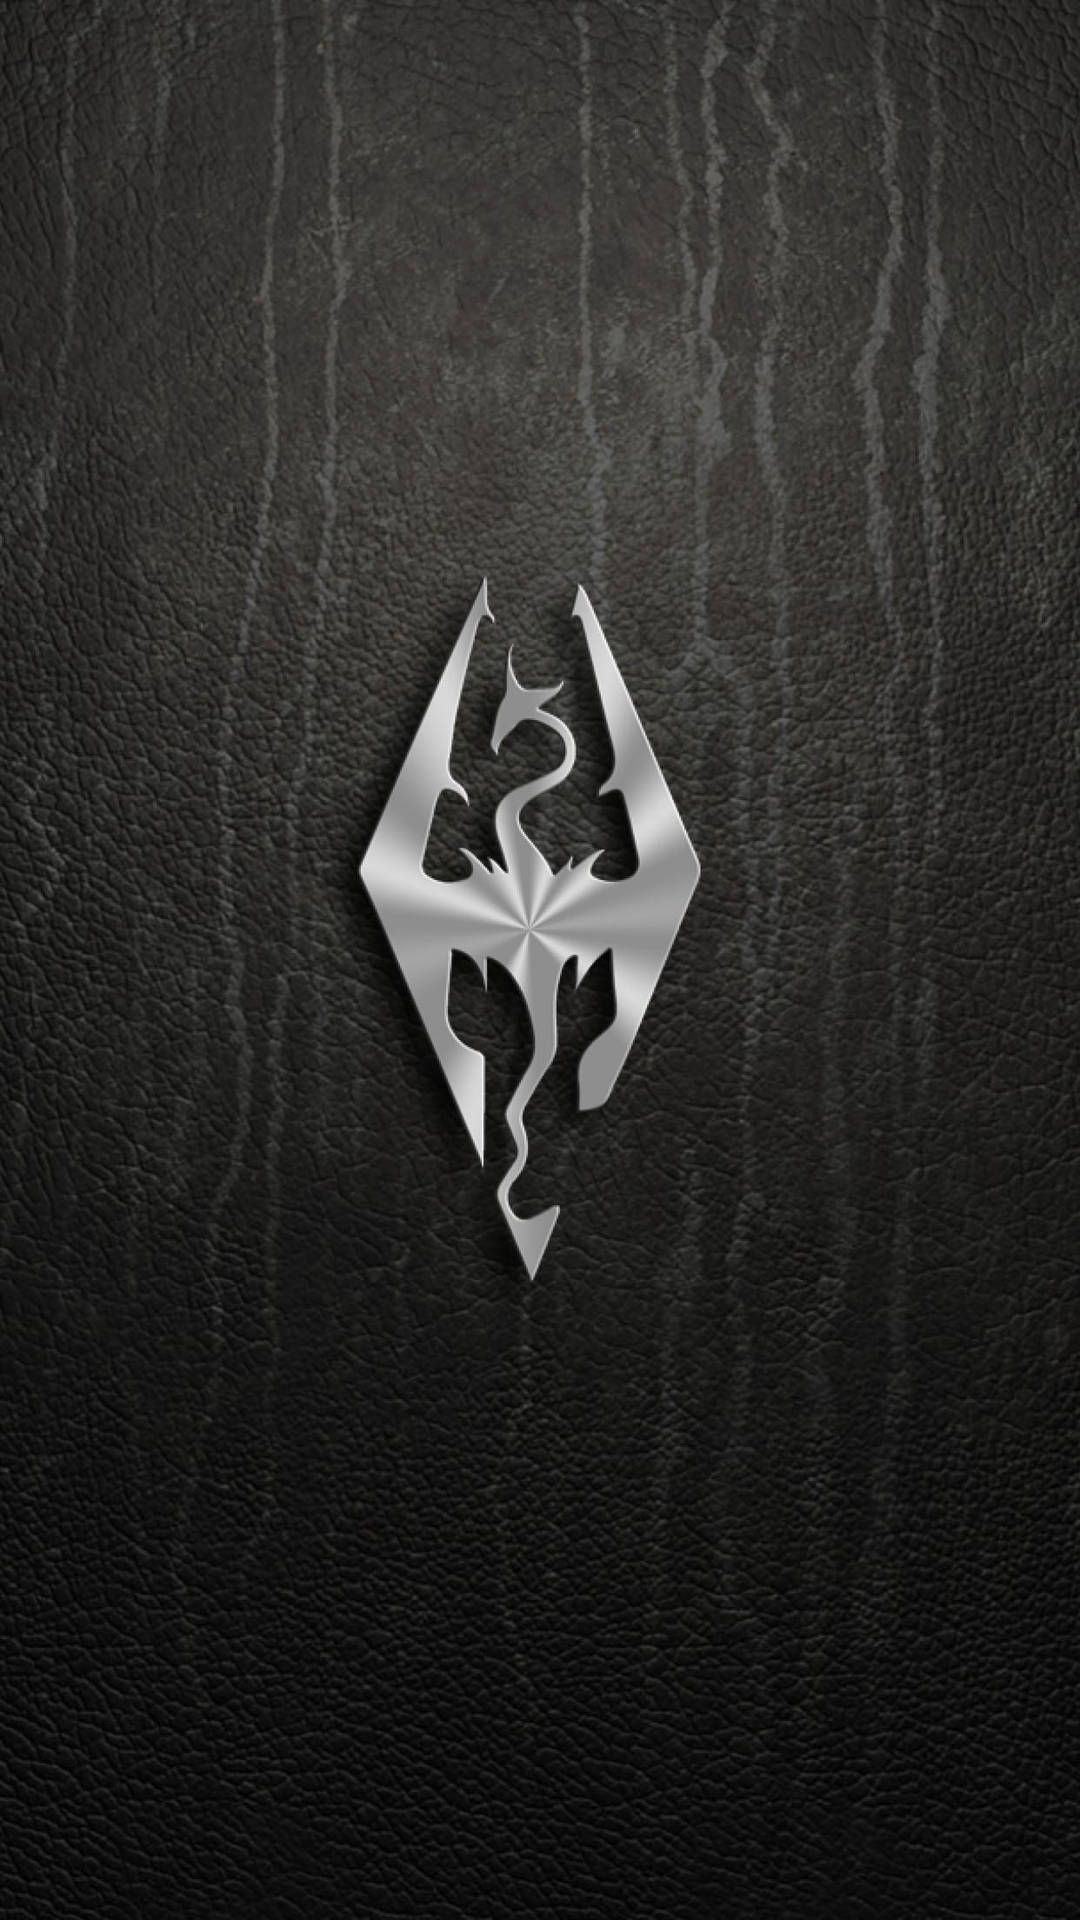 Silver Skyrim Iphone-emblem Wallpaper